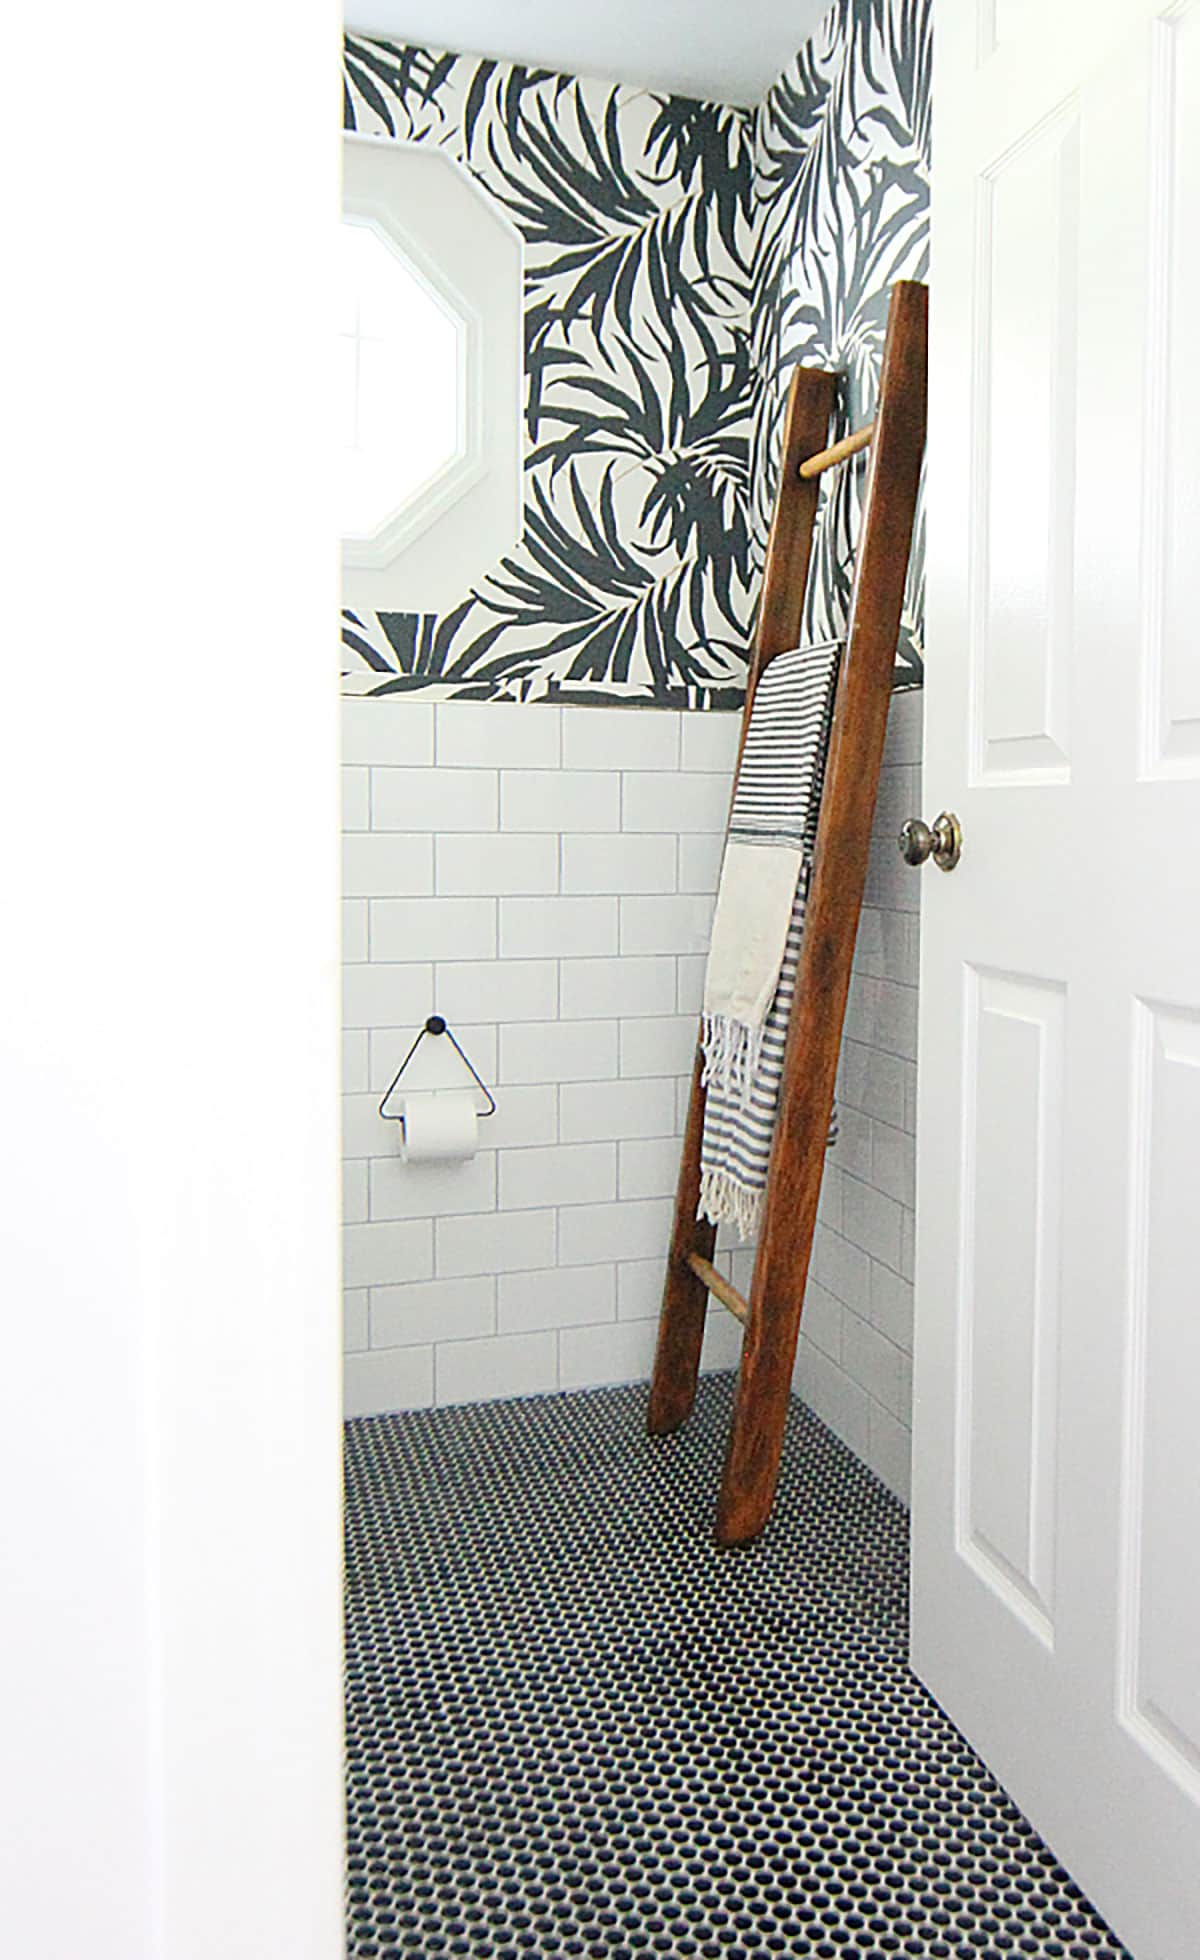 Black and white palm leaf wallpaper in modern bathroom design